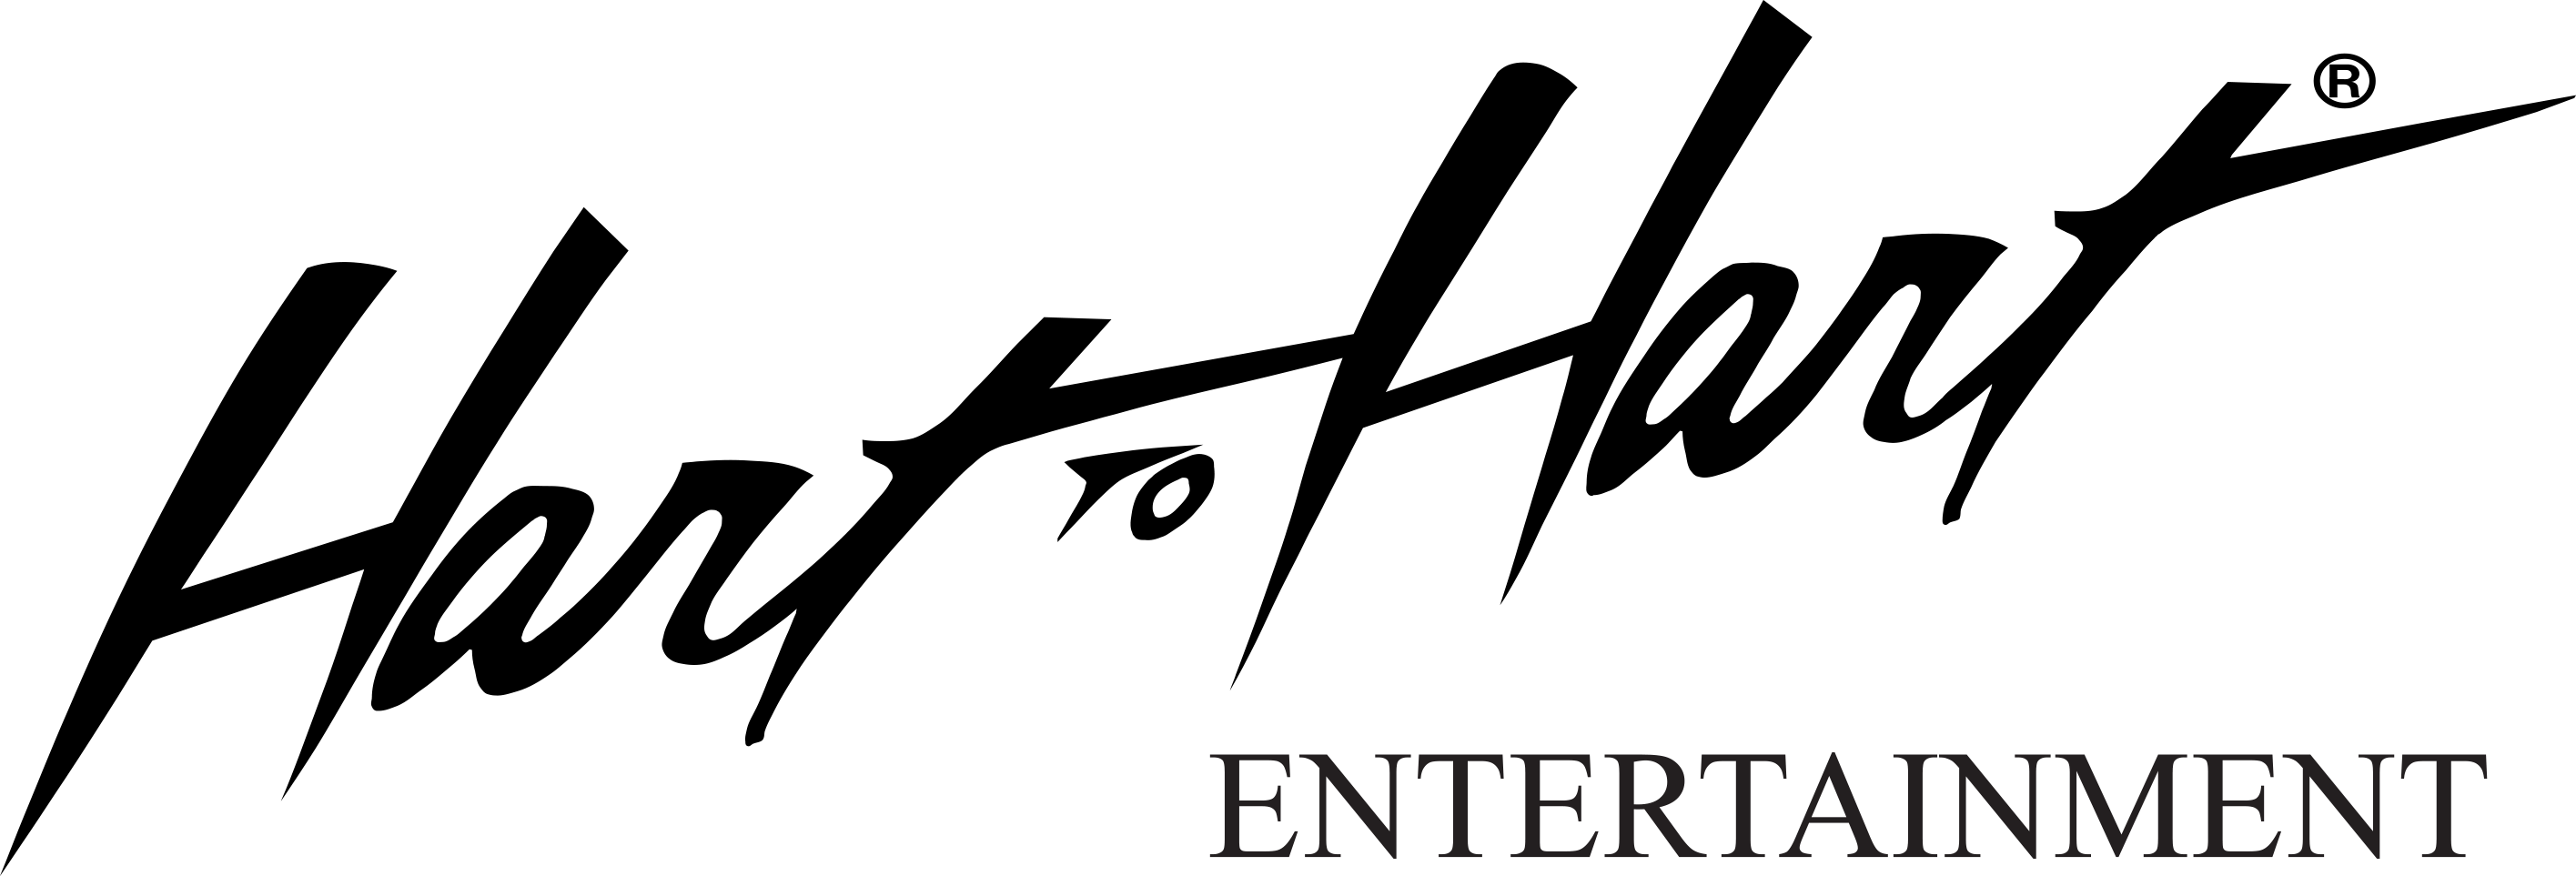 Hart Logo - Hart To Hart Logo to Hart